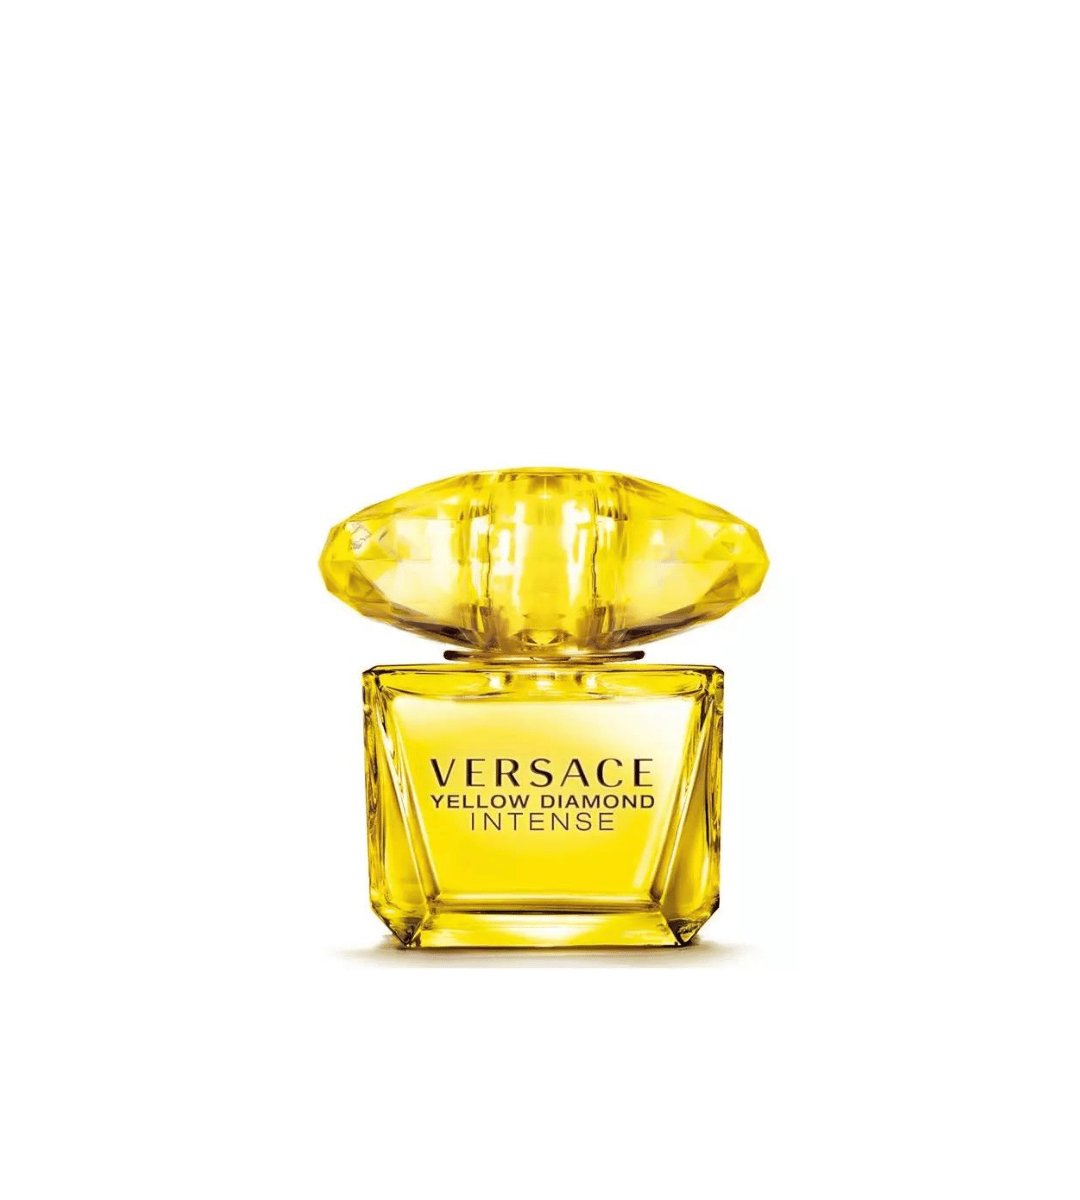 Versace YELLOW DIAMOND INTENSE Eau de Parfum